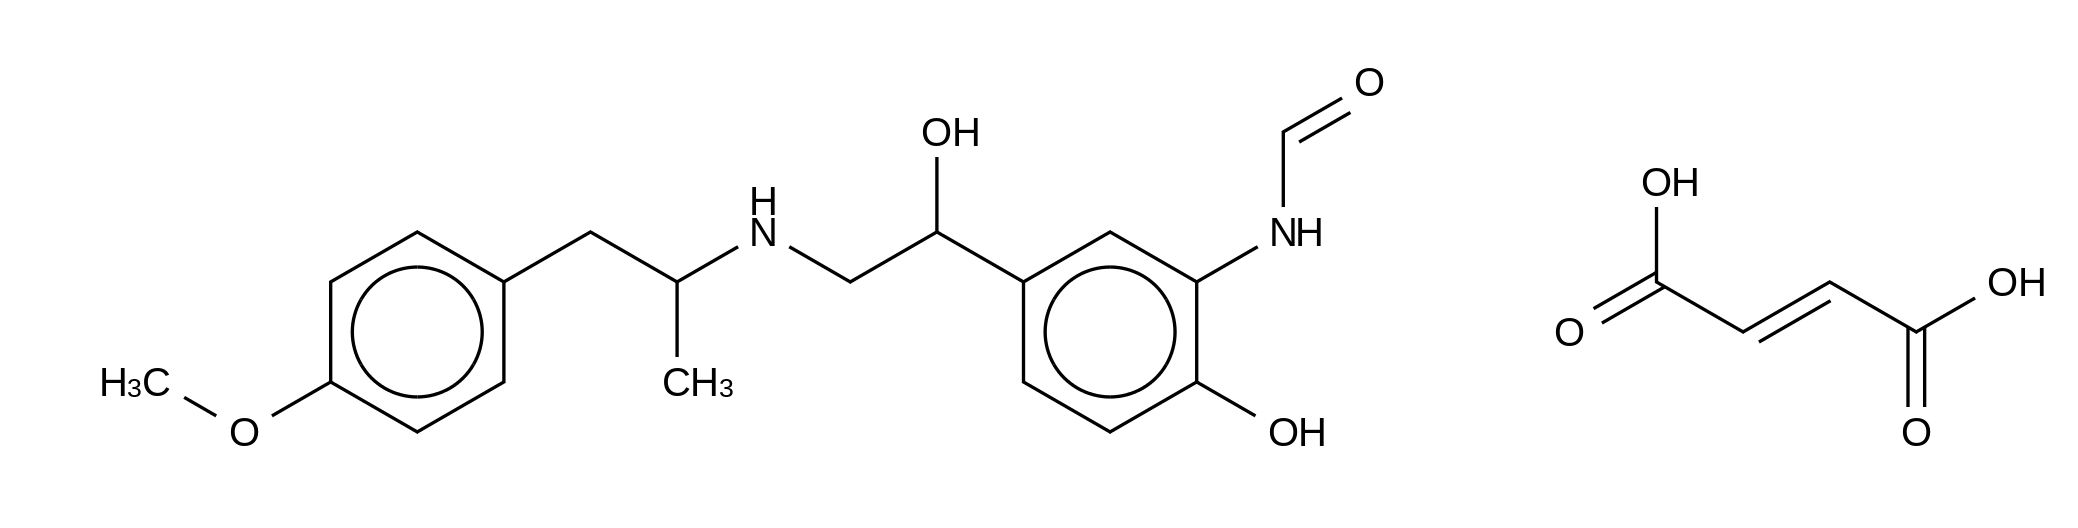 Formoterol Fumarate(Mixture of Diastereomers)